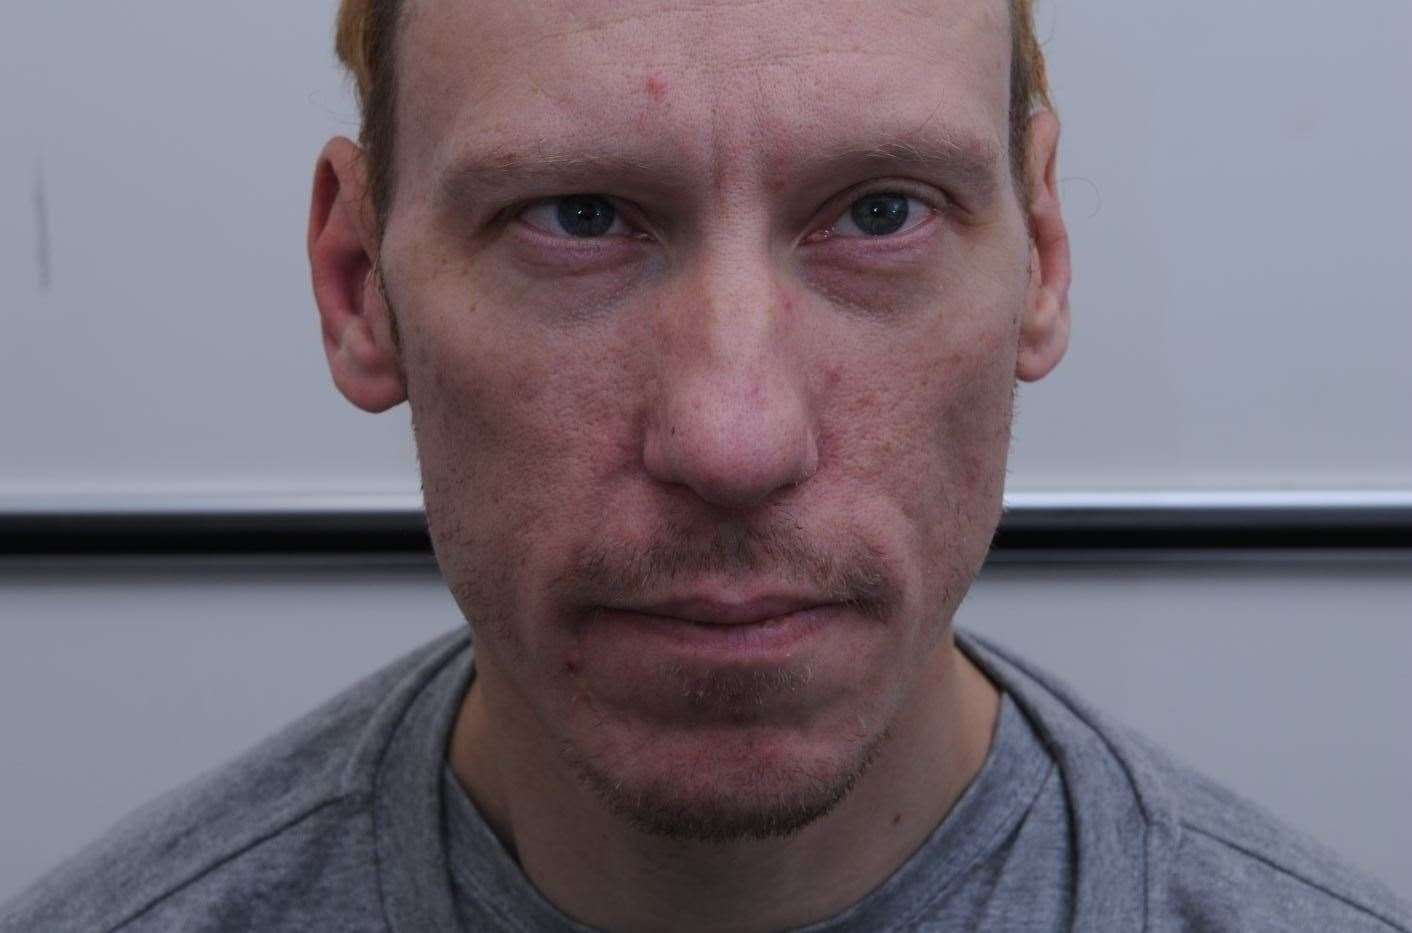 Stephen Port was jailed in November 2016